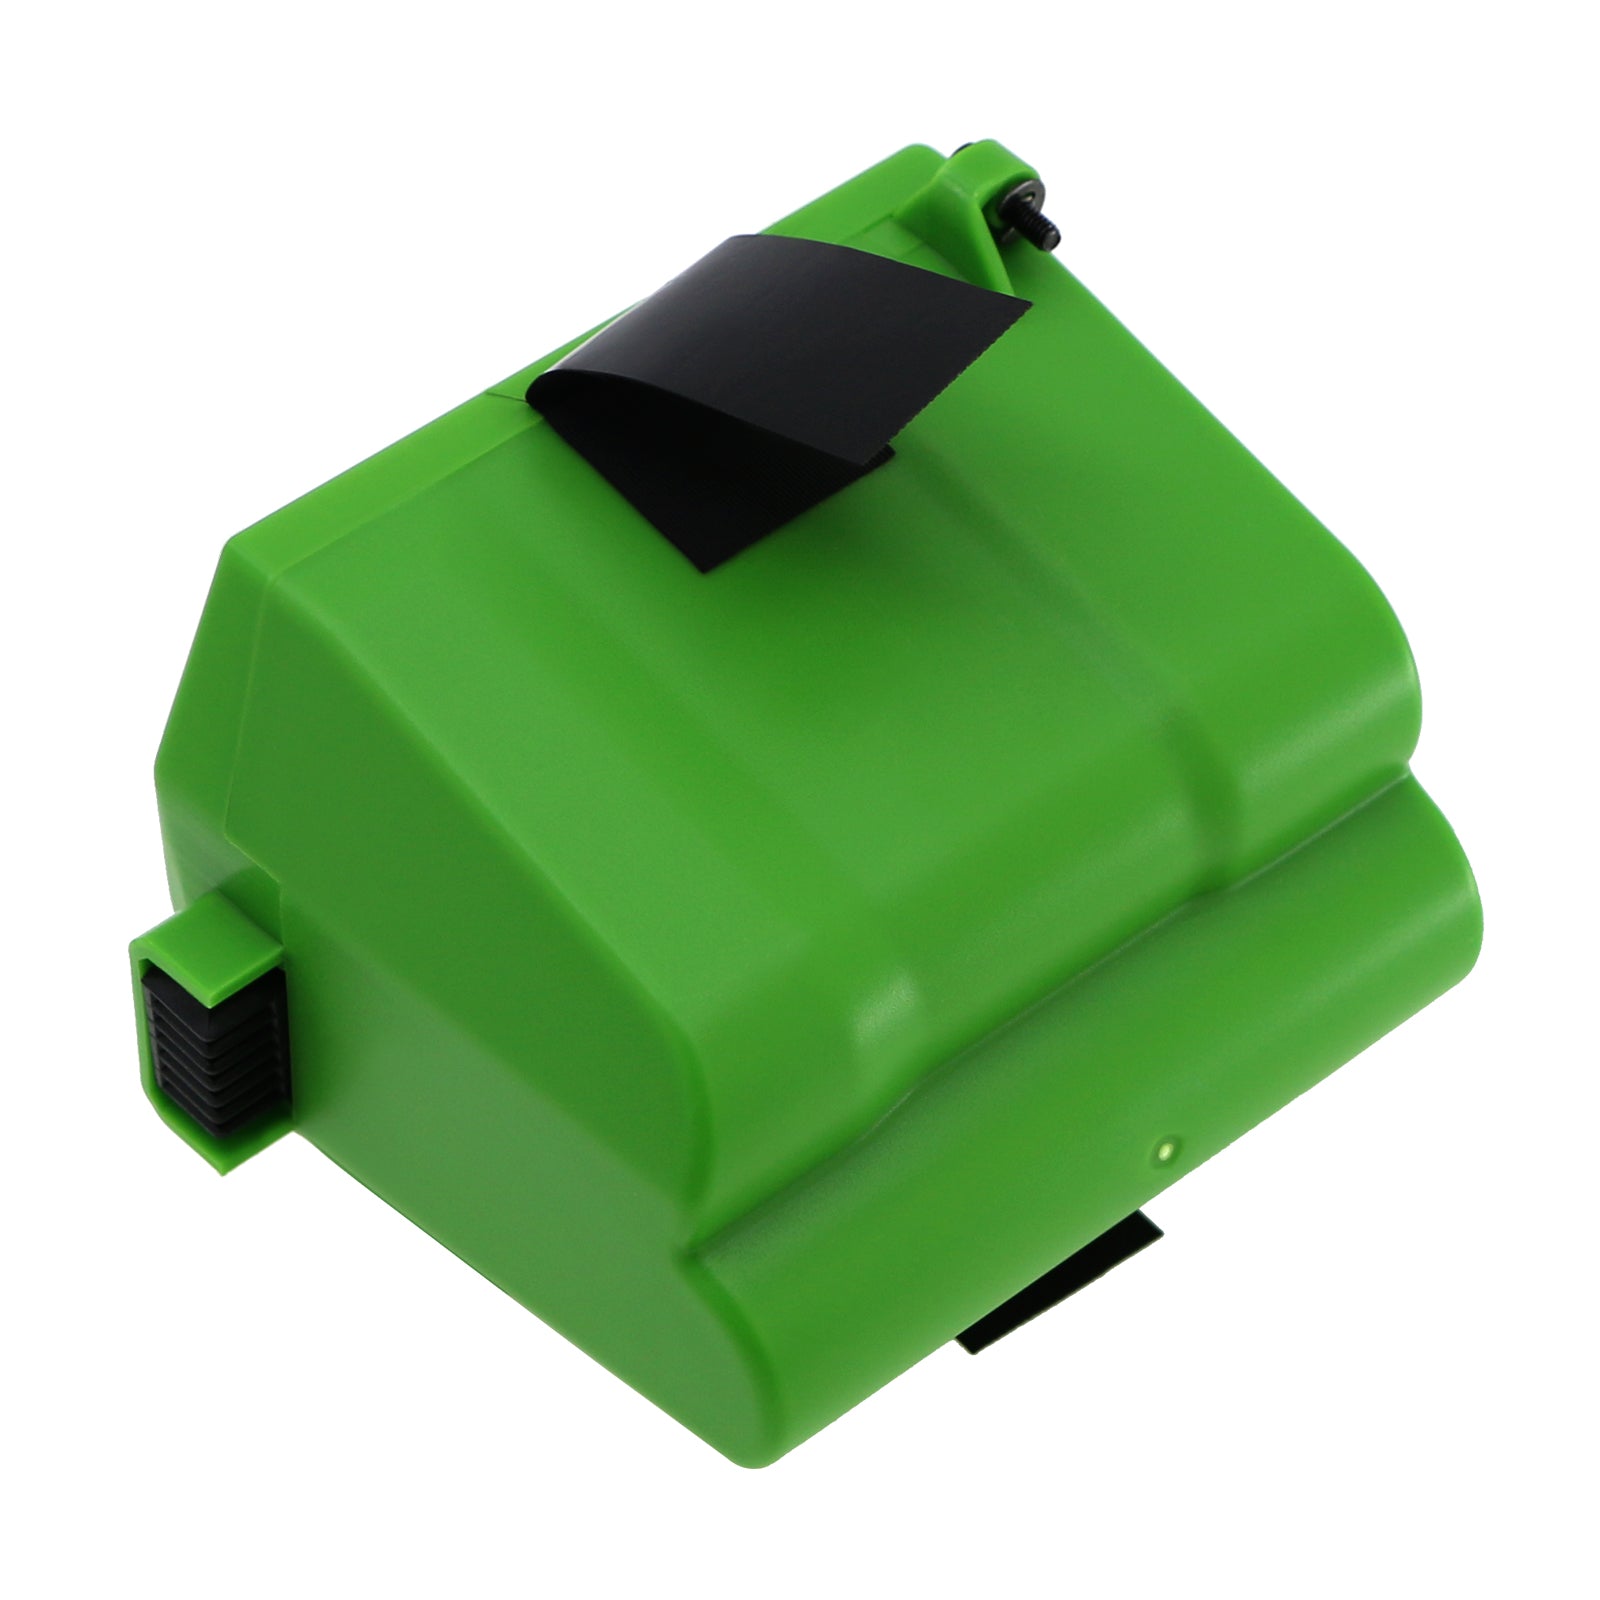 3300mAh ABL-B, 4650994 Battery for iRobot Roomba S9, Roomba S9+, S955020-SMAVtronics